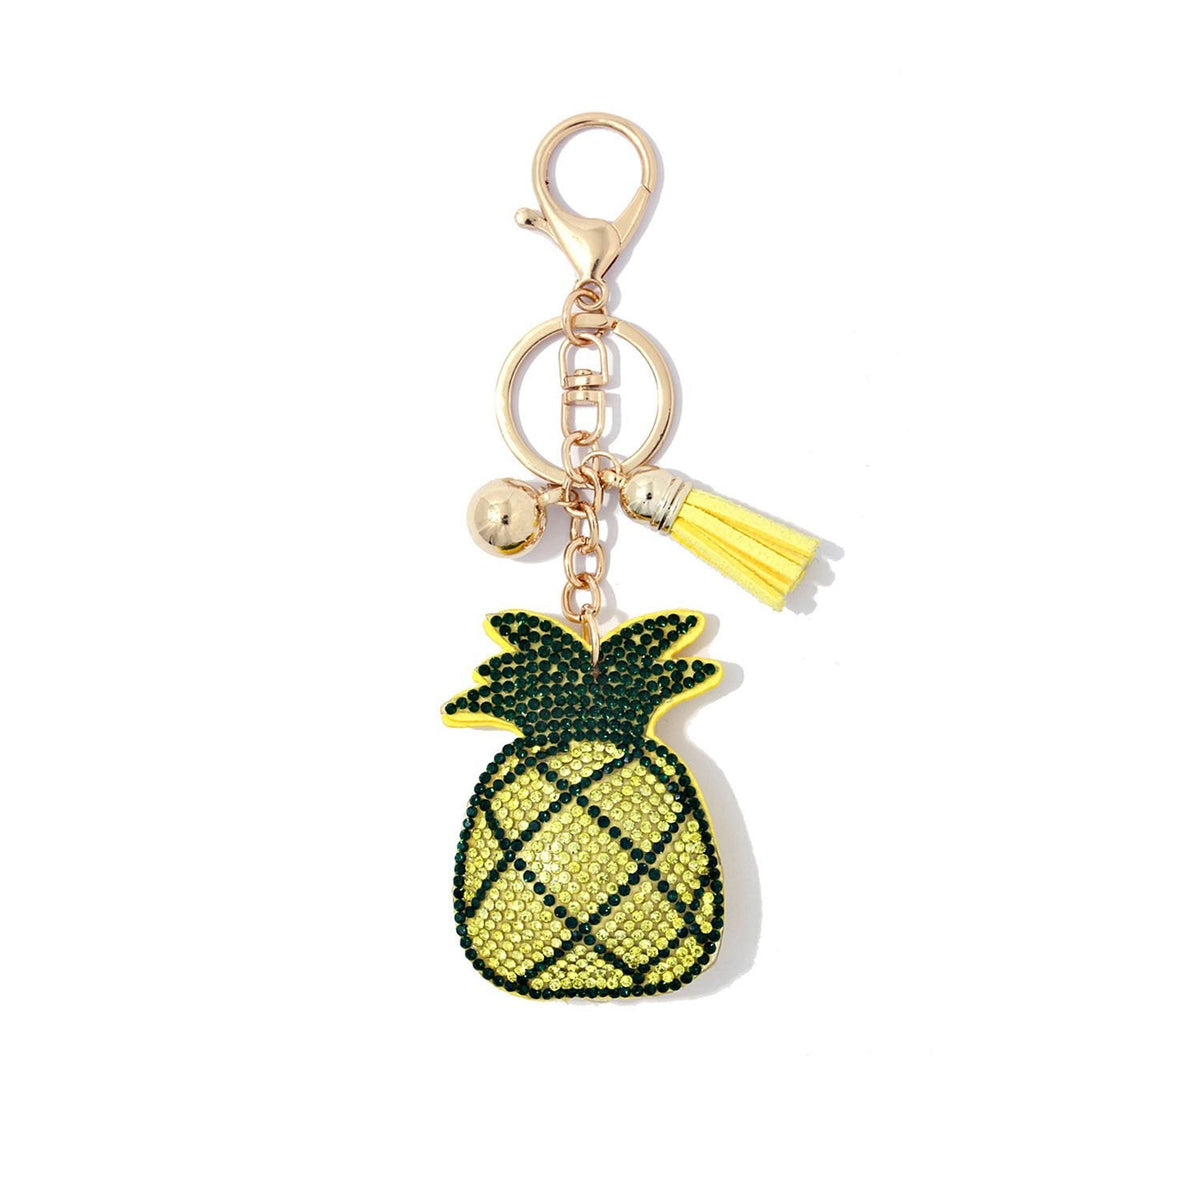 Pineapple Key Chain - Key Chains